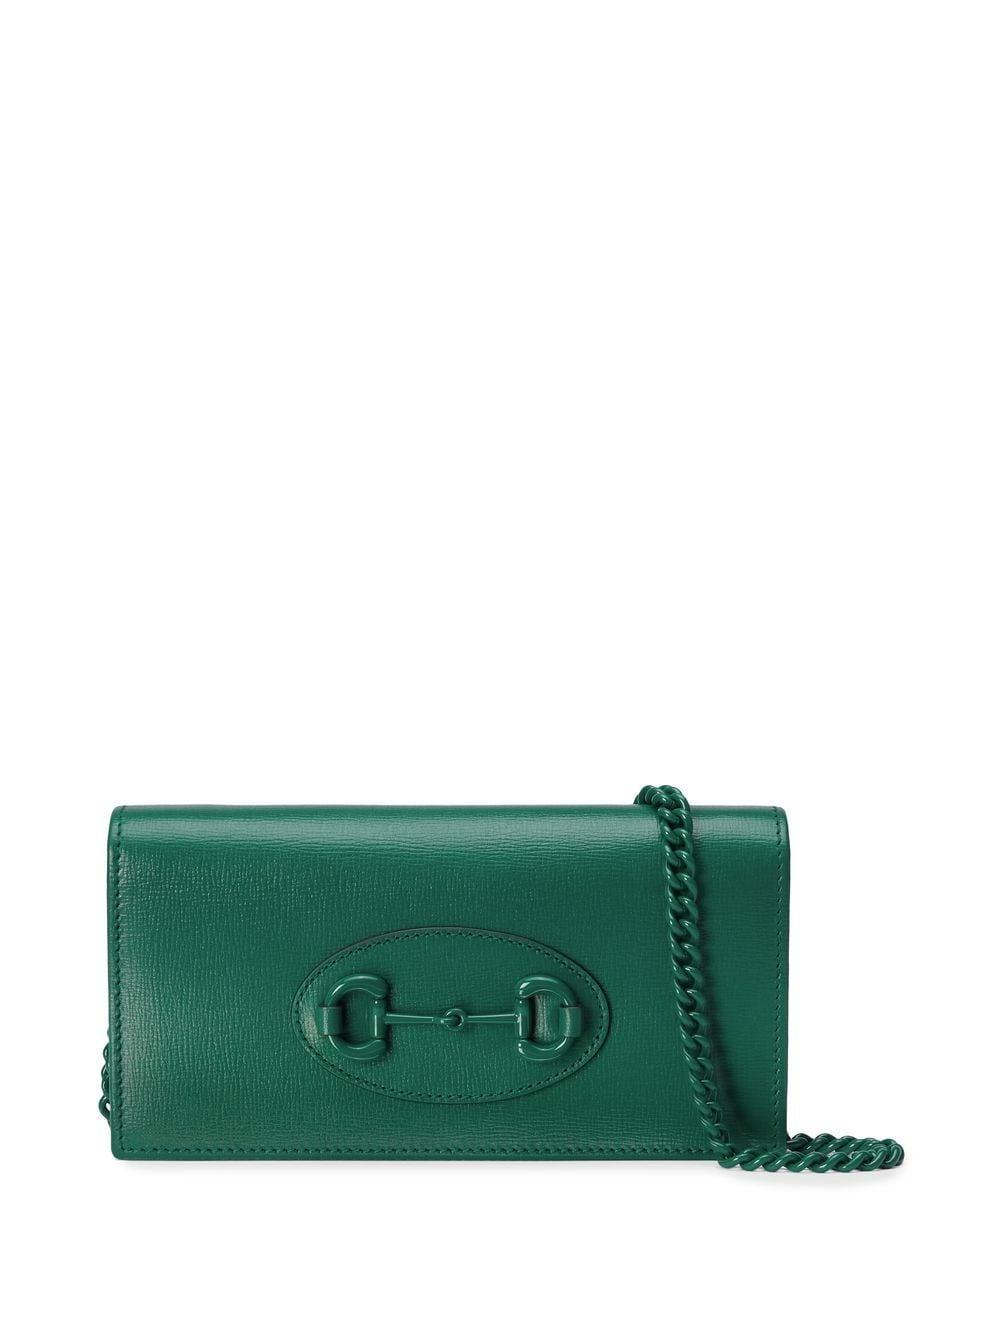 Gucci Horsebit 1955 Leather Chain Wallet in Green | Lyst